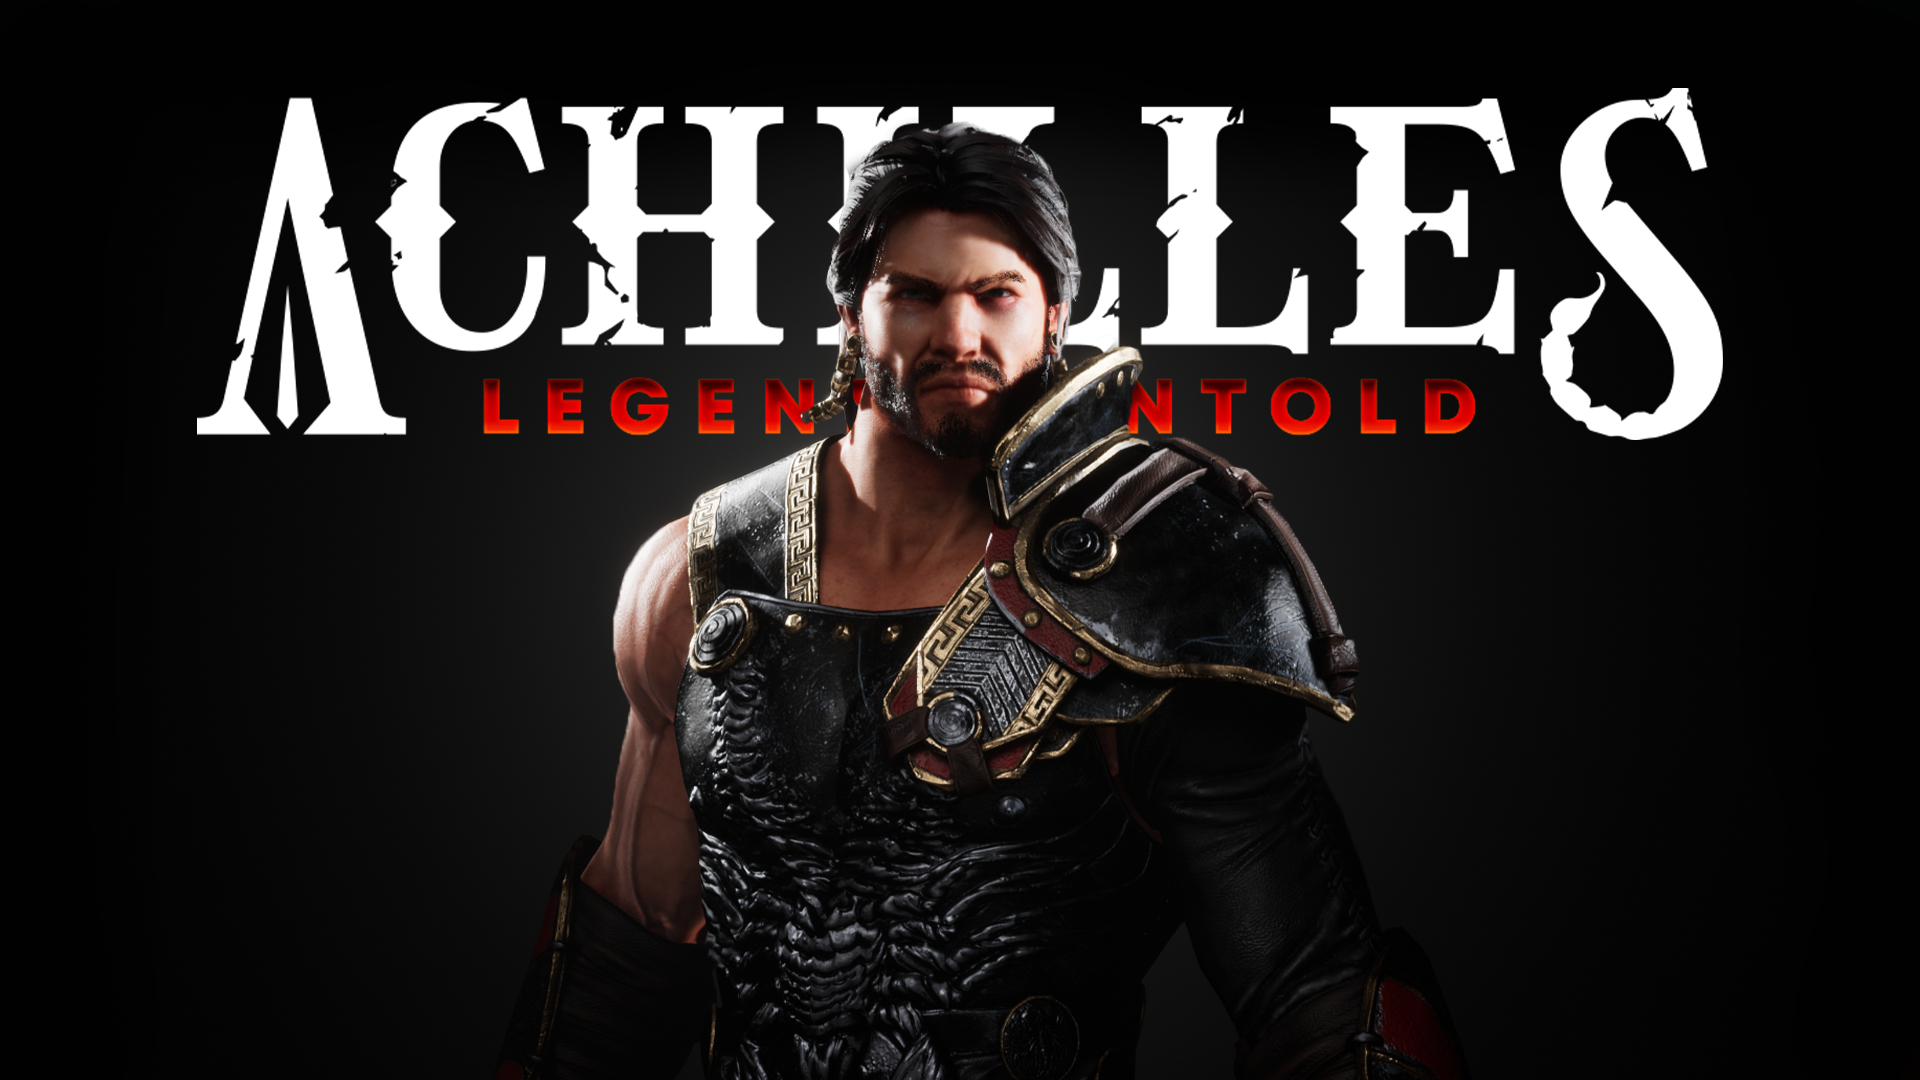 Achilles Legends Untold instal the new for ios